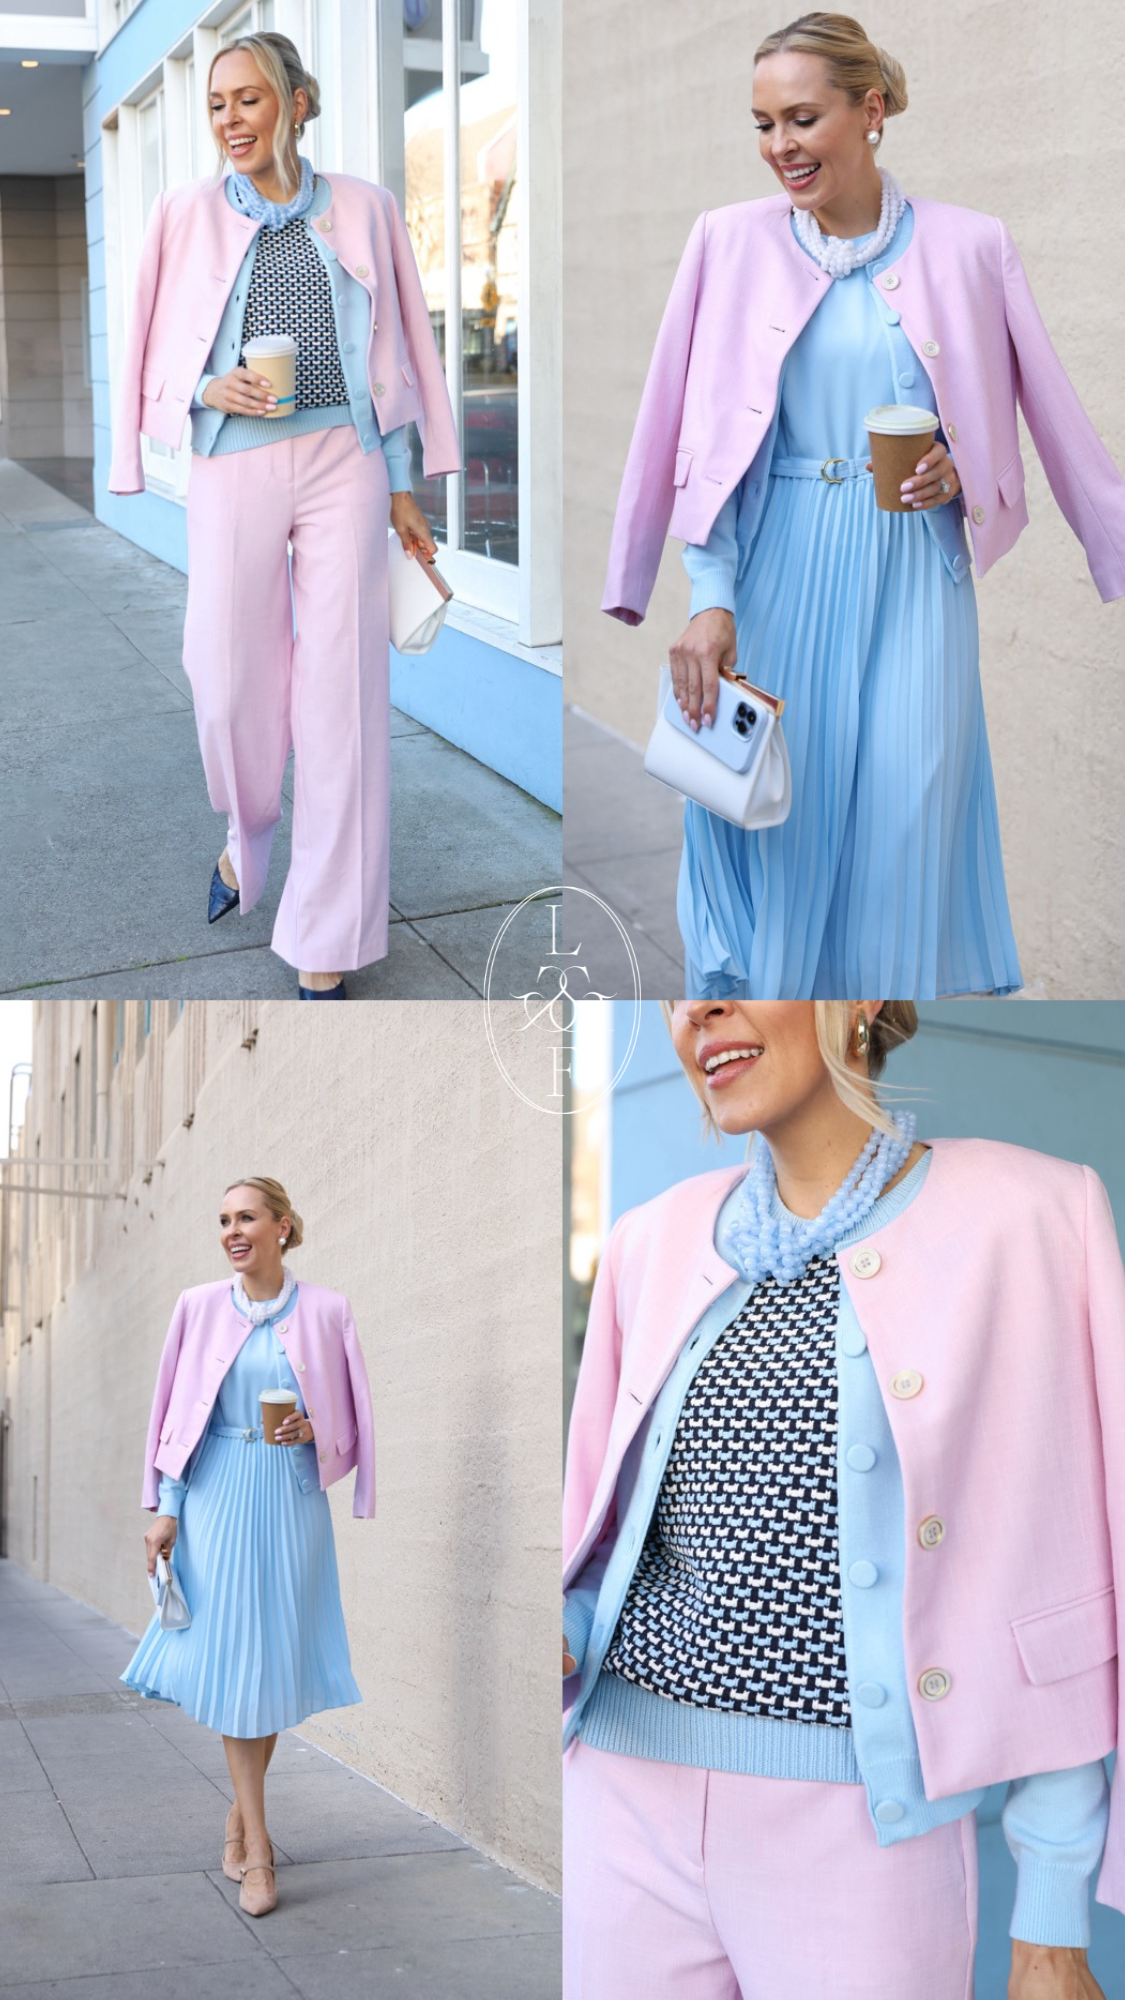 ANN TAYLOR spring favorites, Ann taylor pink and blue style, Ann taylor spring style, spring outfits for women, spring workwear